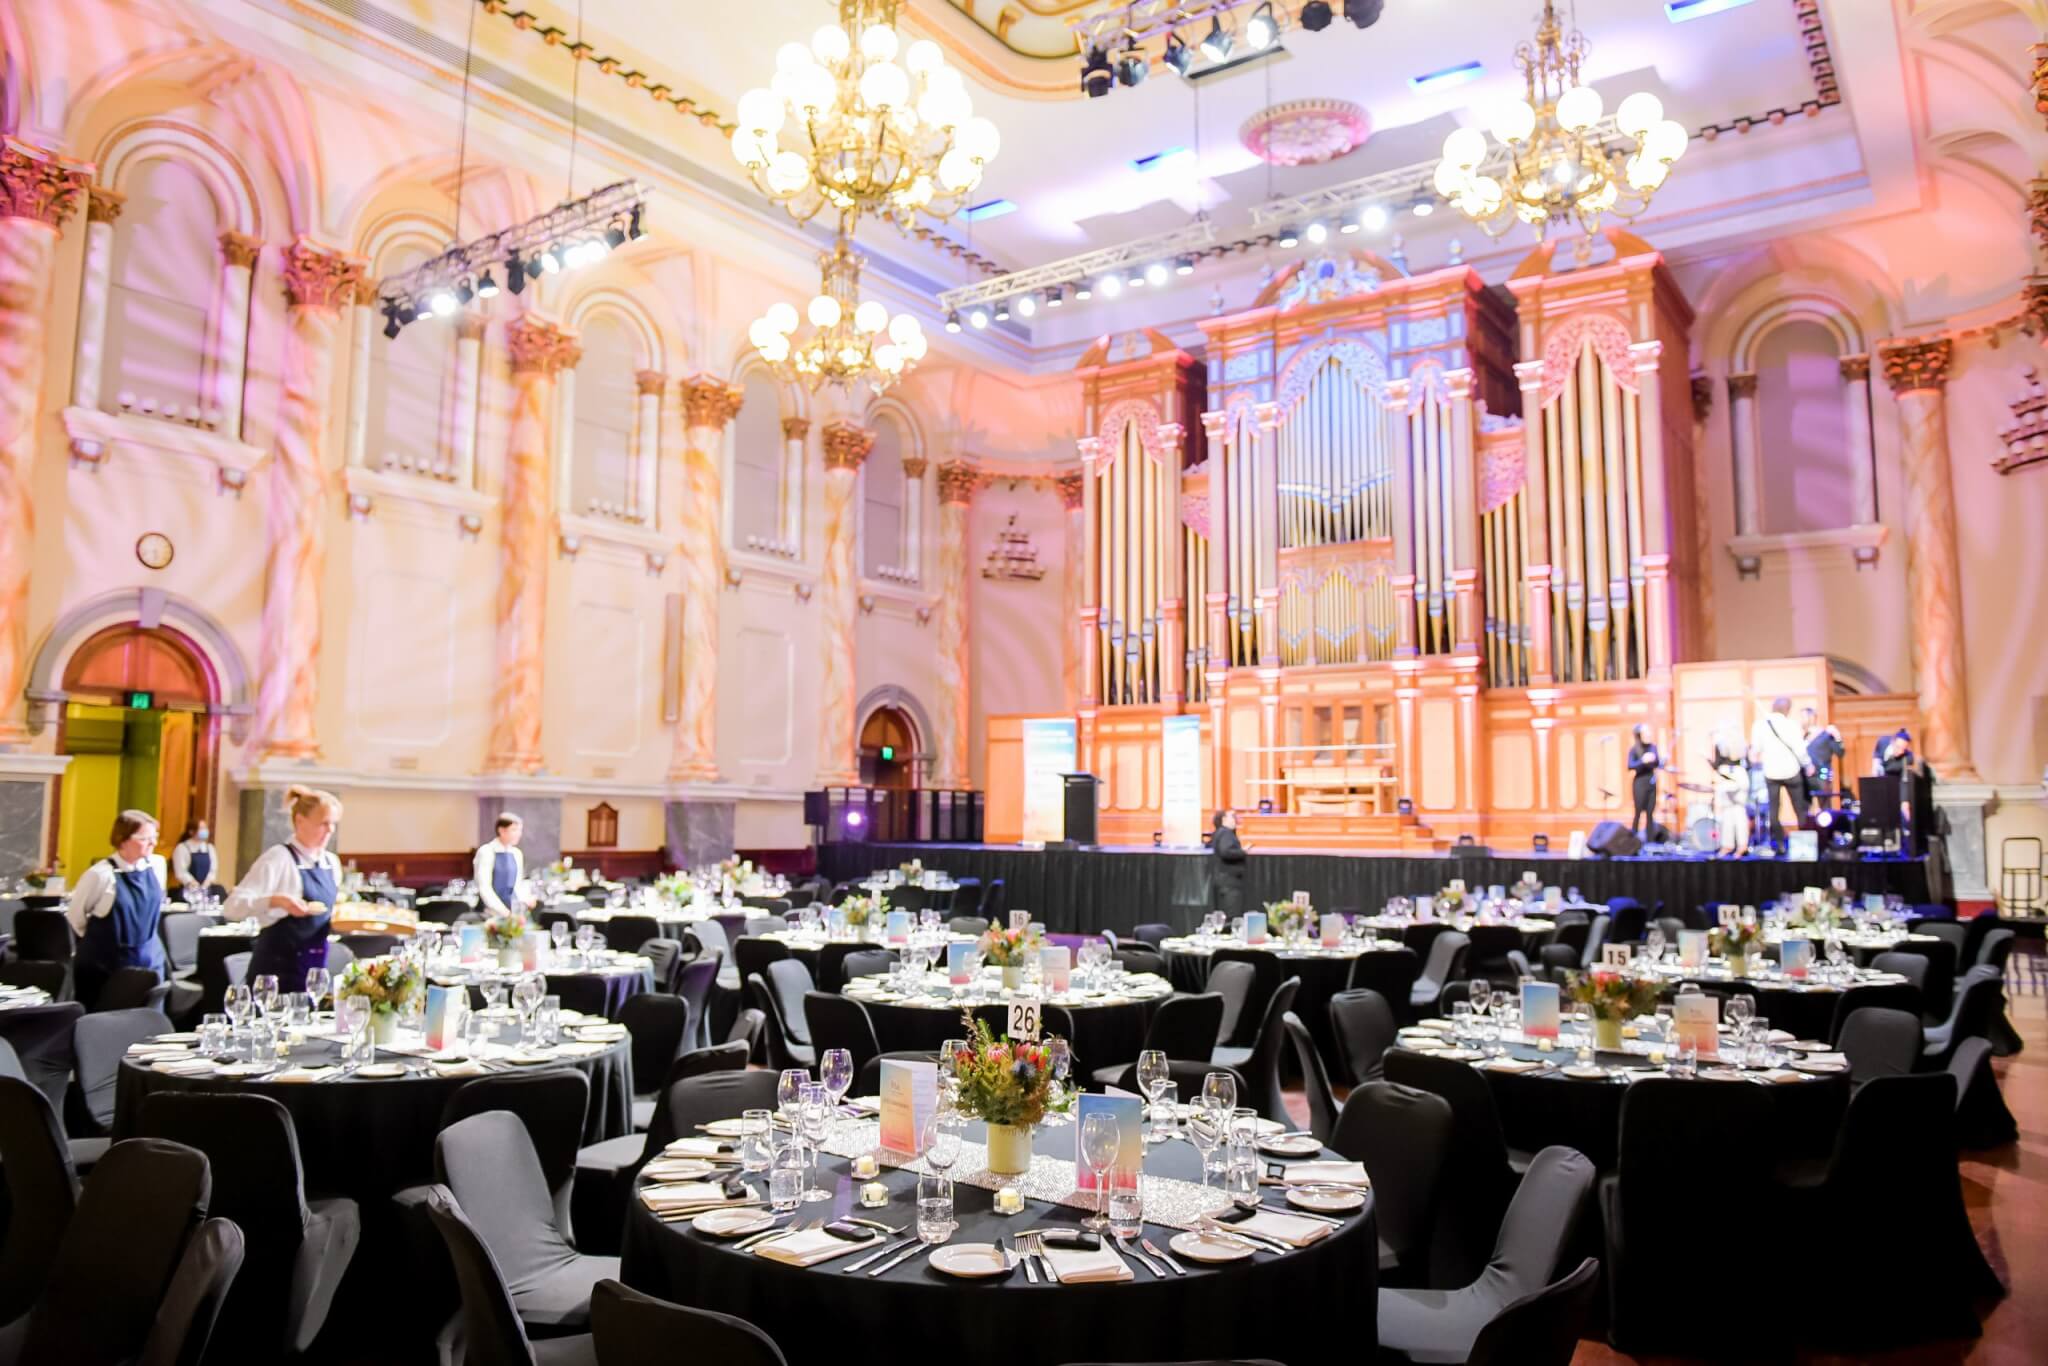 Adelaide Town Hall wedding ceremony location